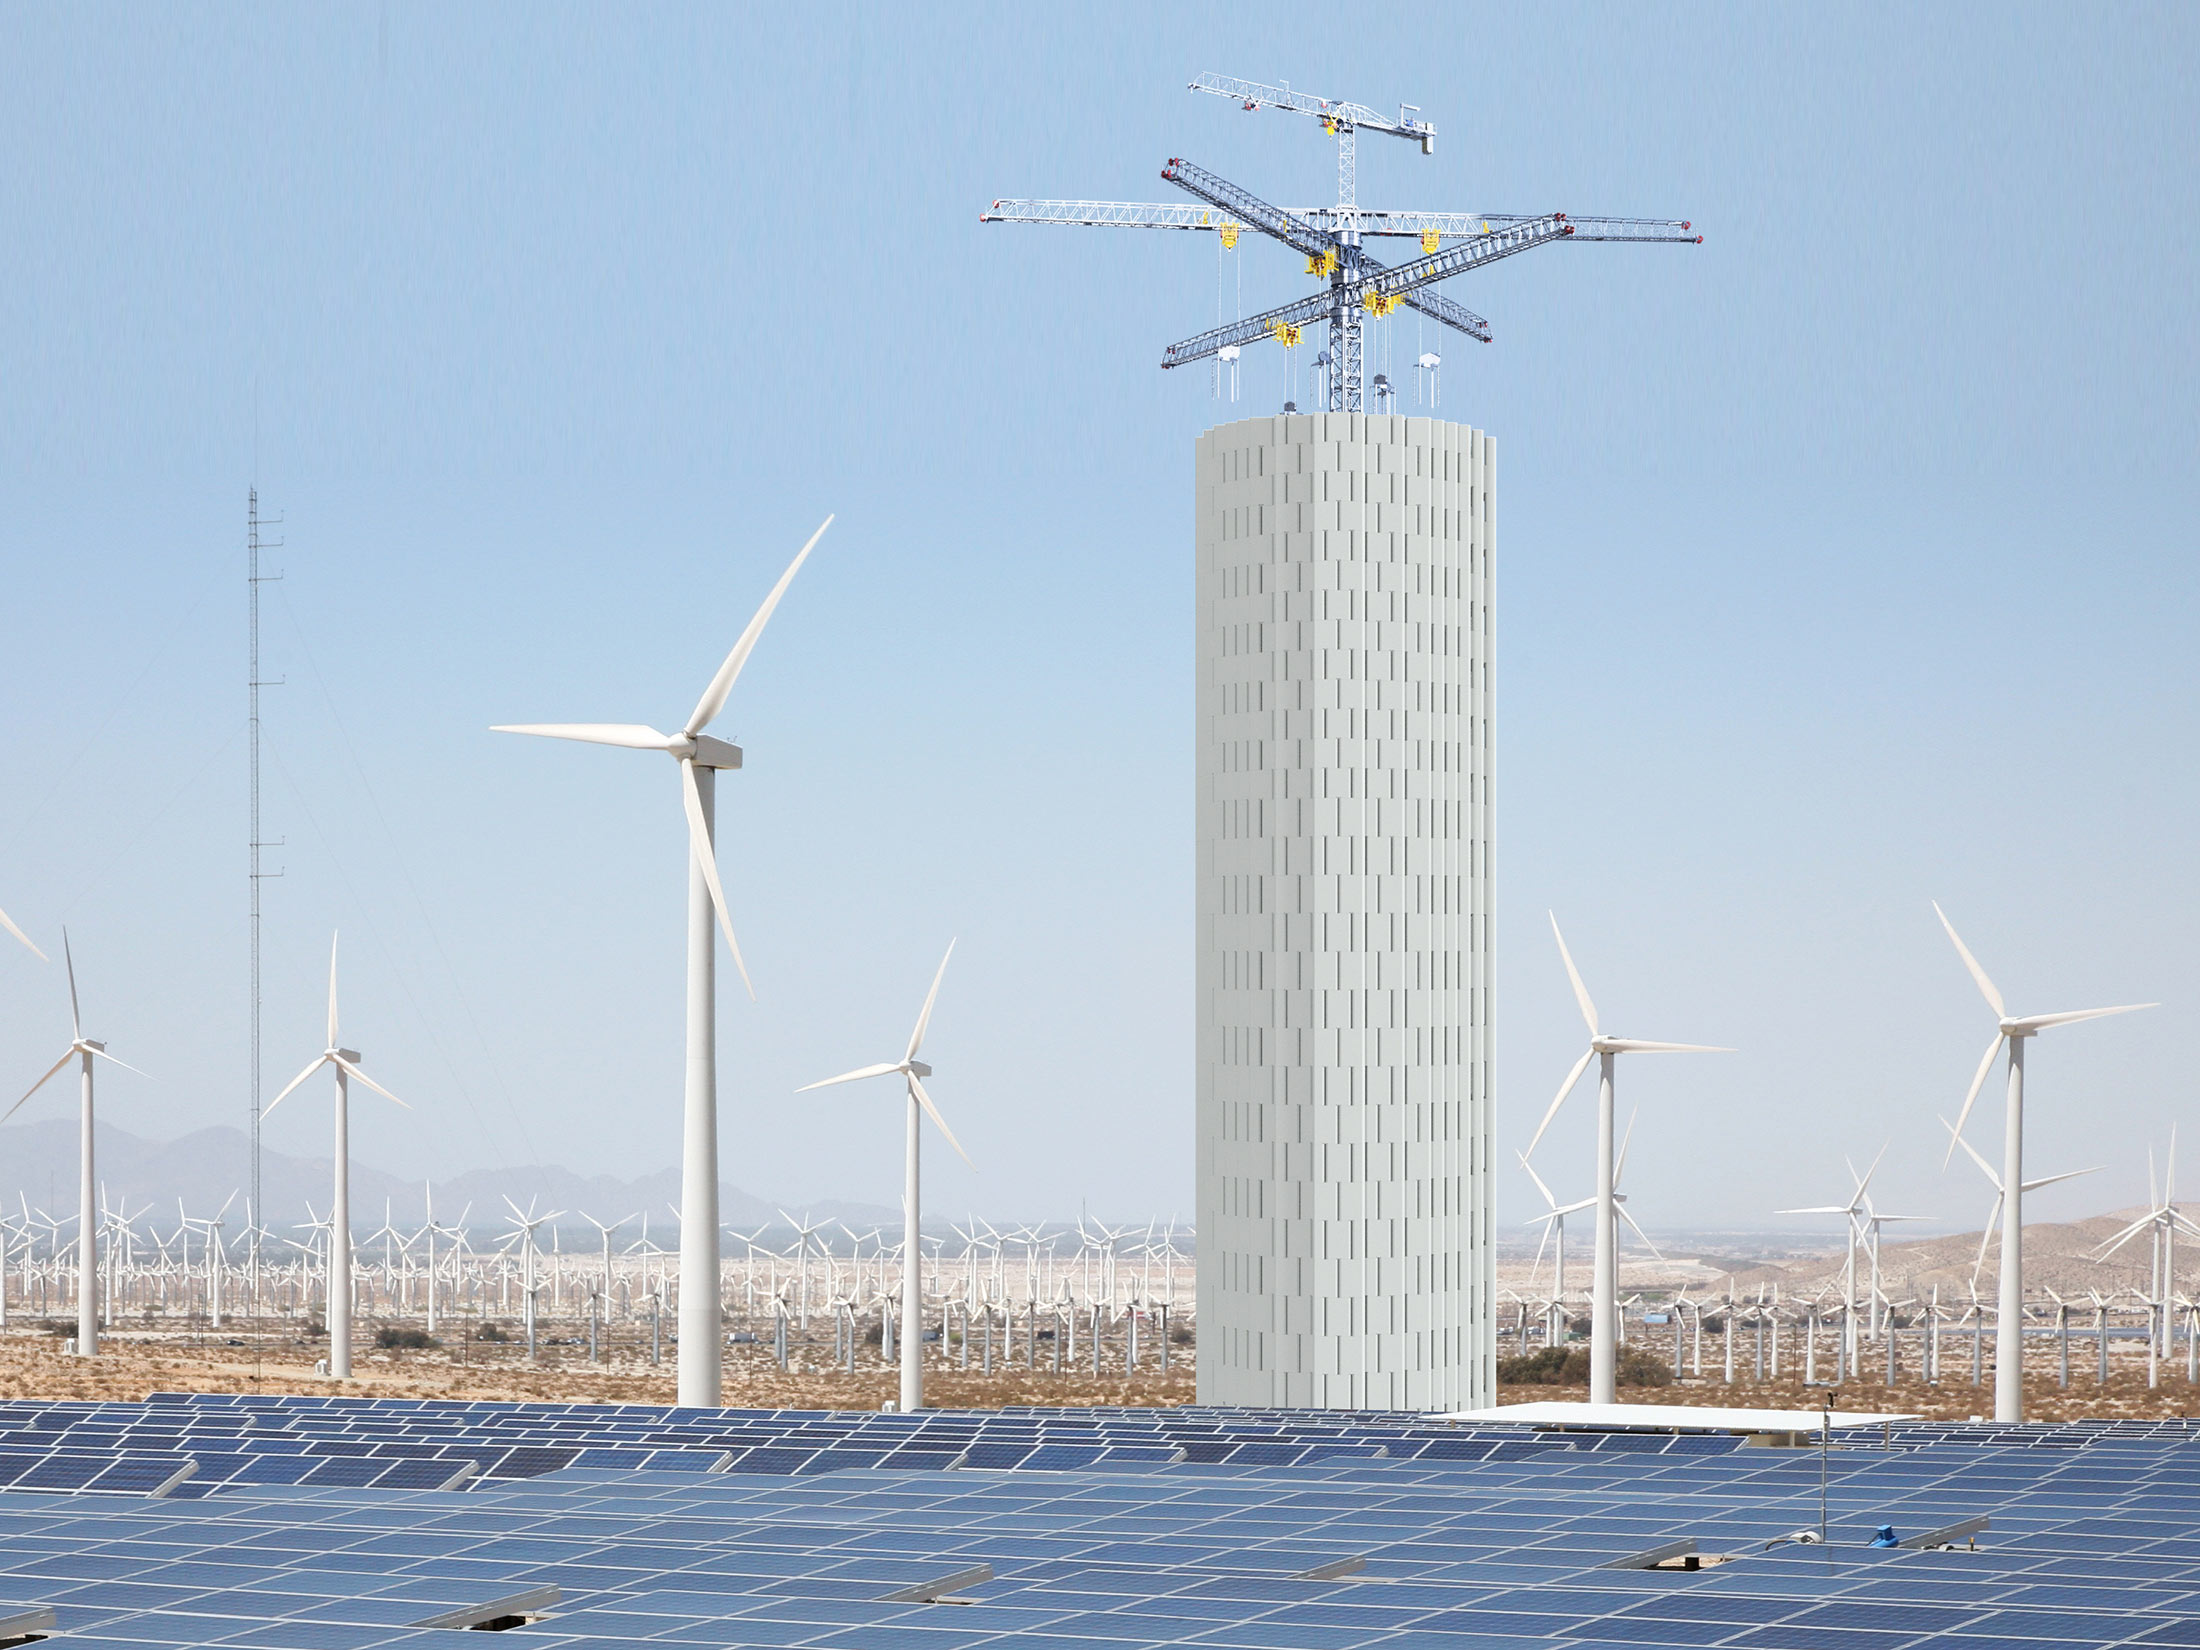 Storing wind energy